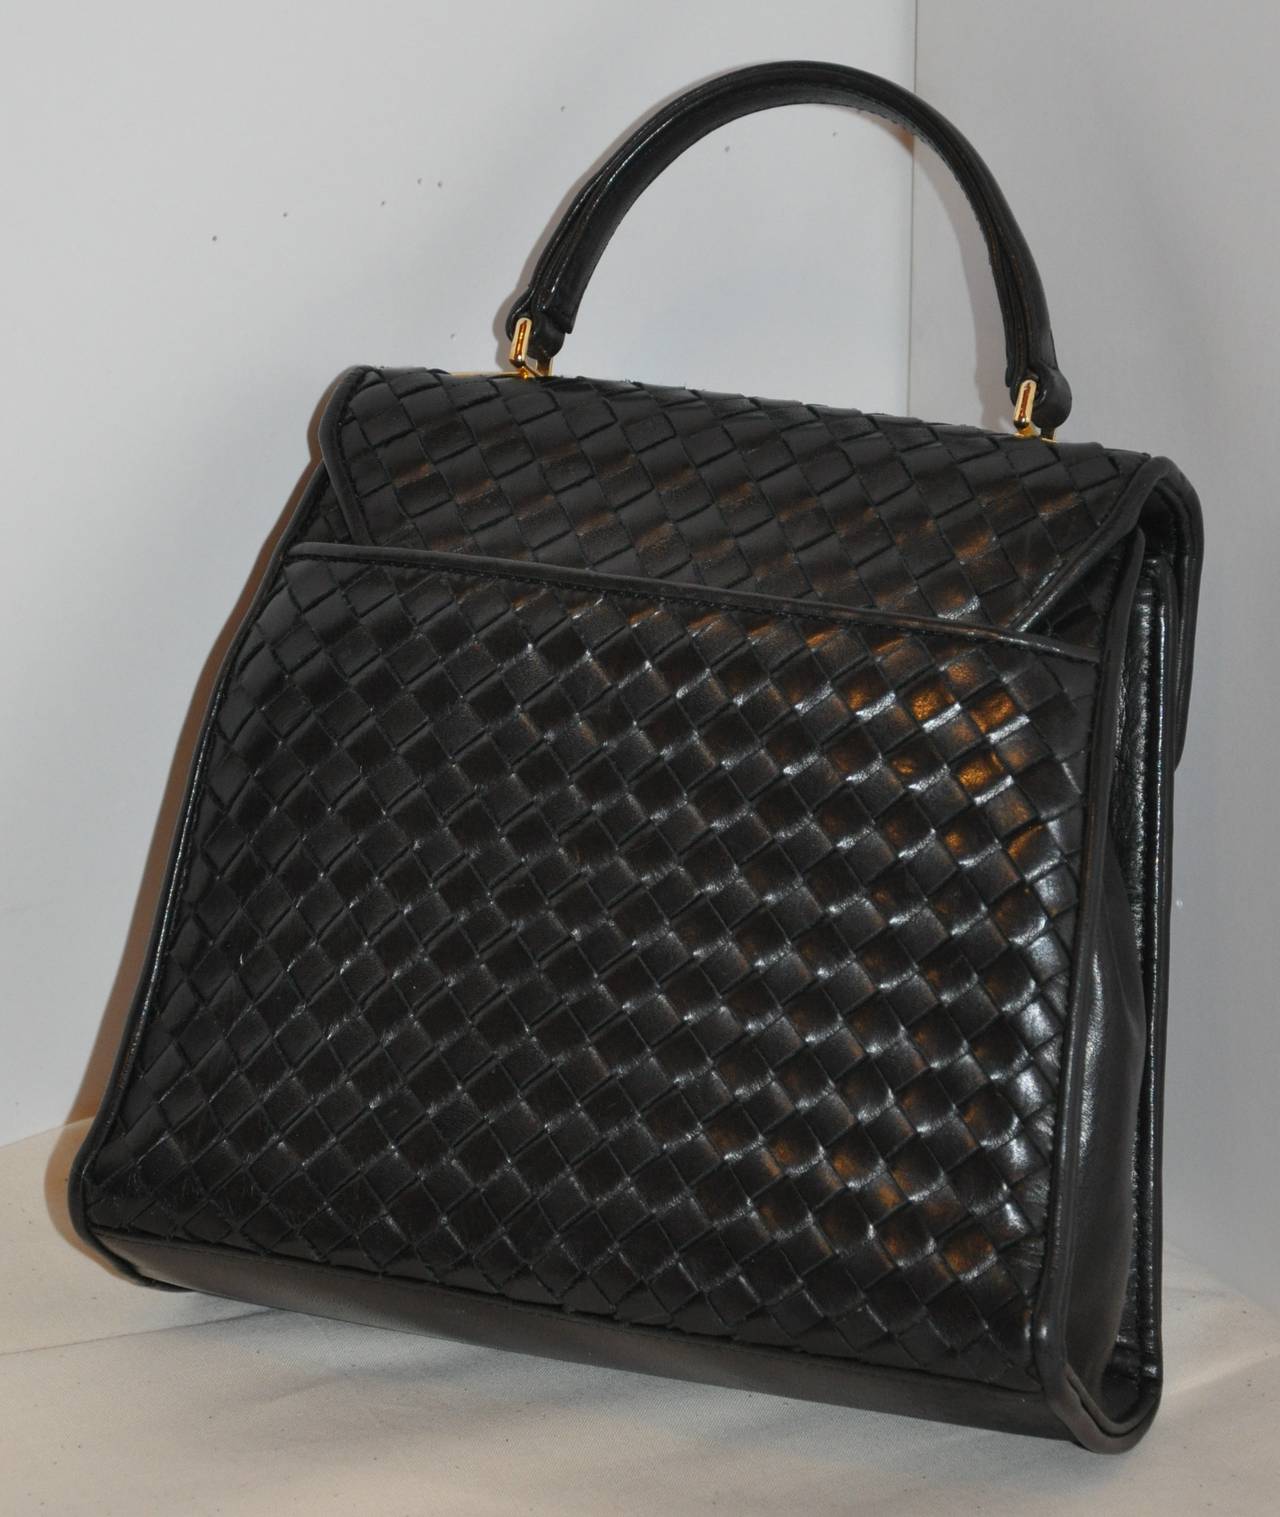 Saks Fifth Avenue Black Lambskin Woven Leather Handbag For Sale at 1stdibs